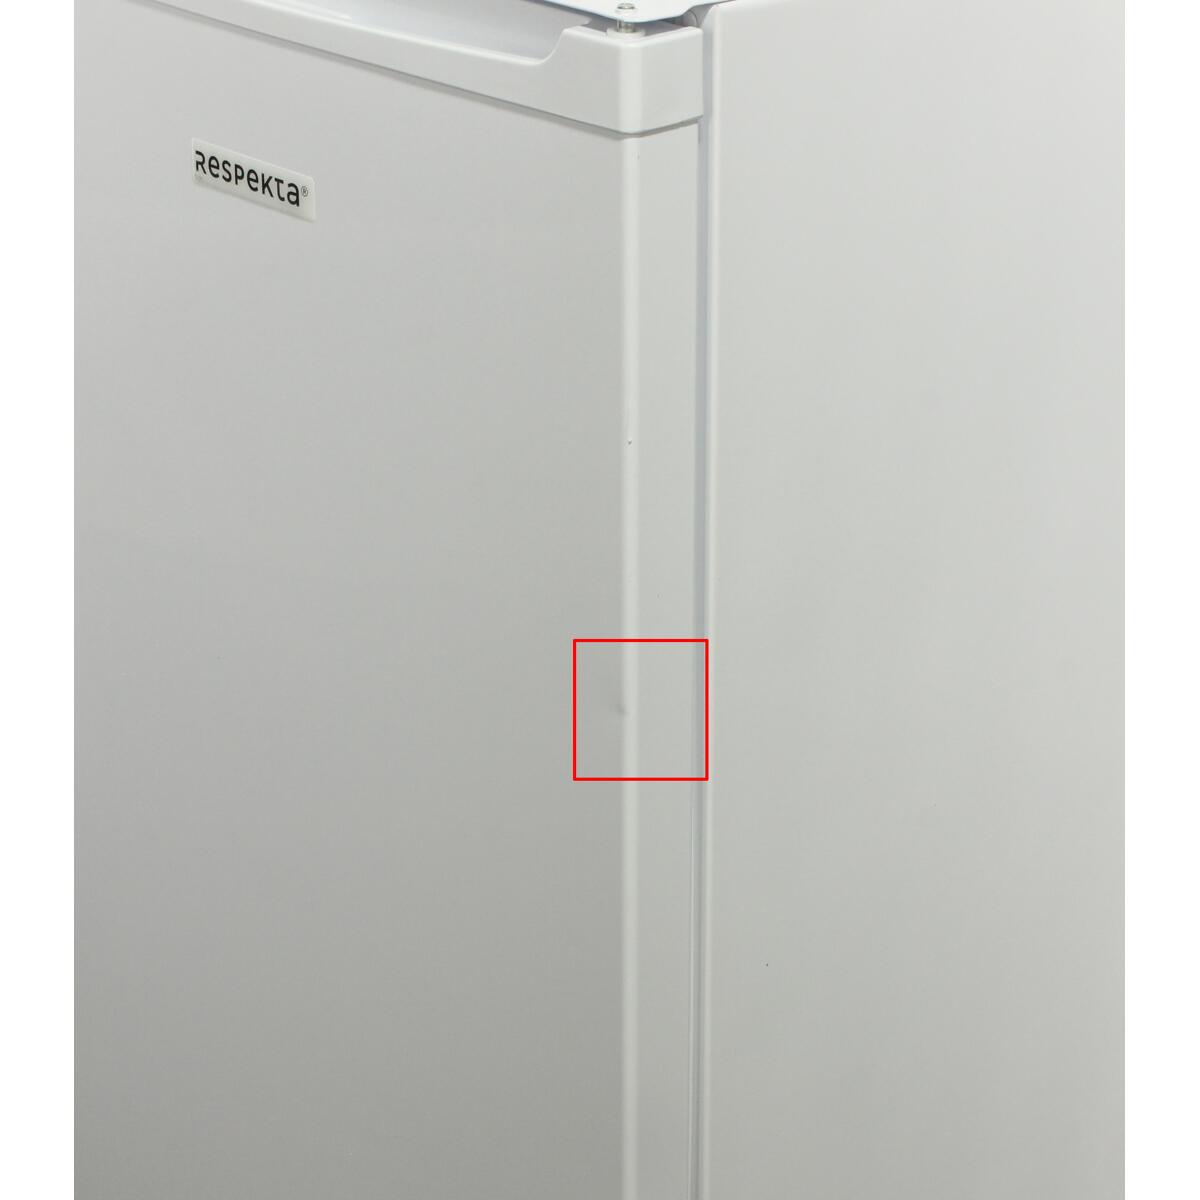 Respekta KSU50 Unterbau-Kühlschrank 48cm breit 82 Liter Festtür-Technik